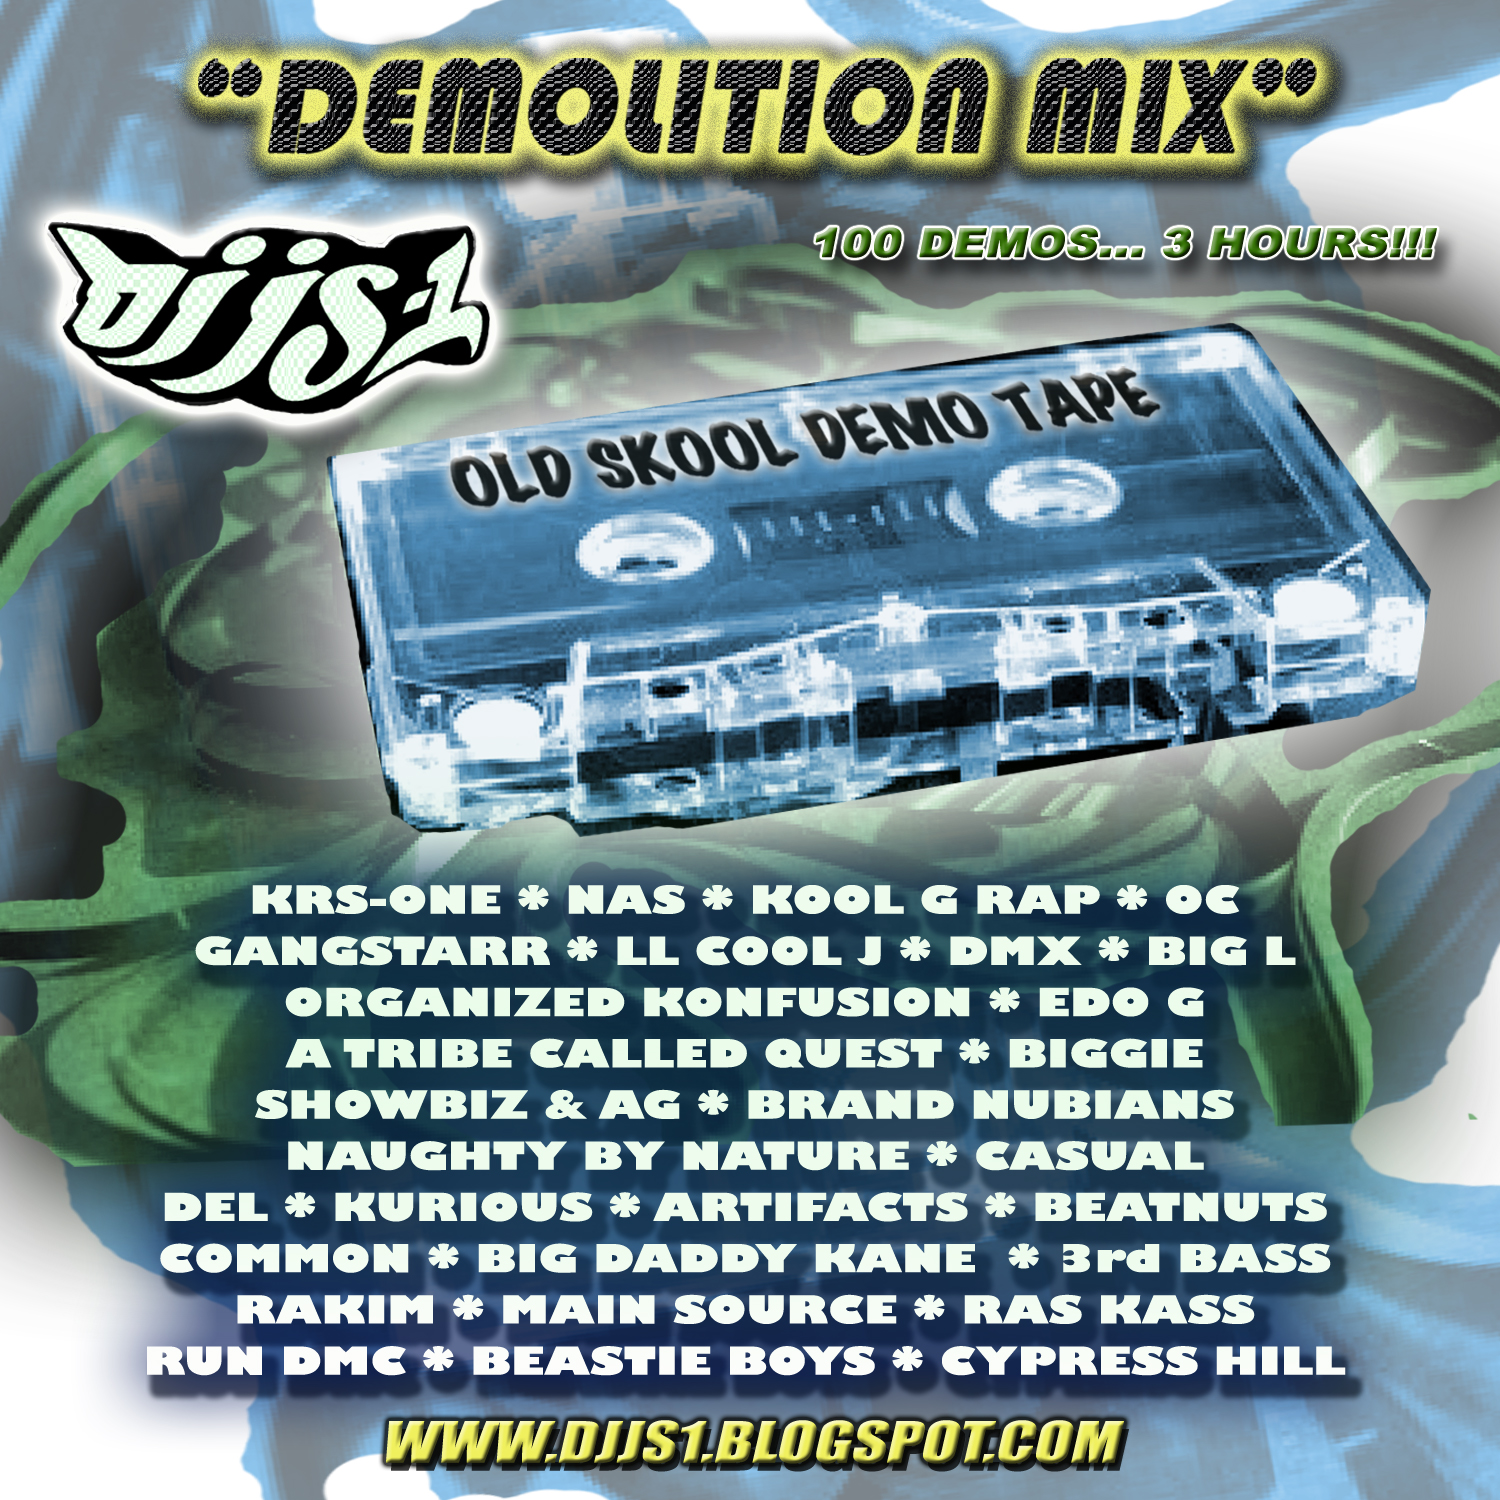 Demo mix